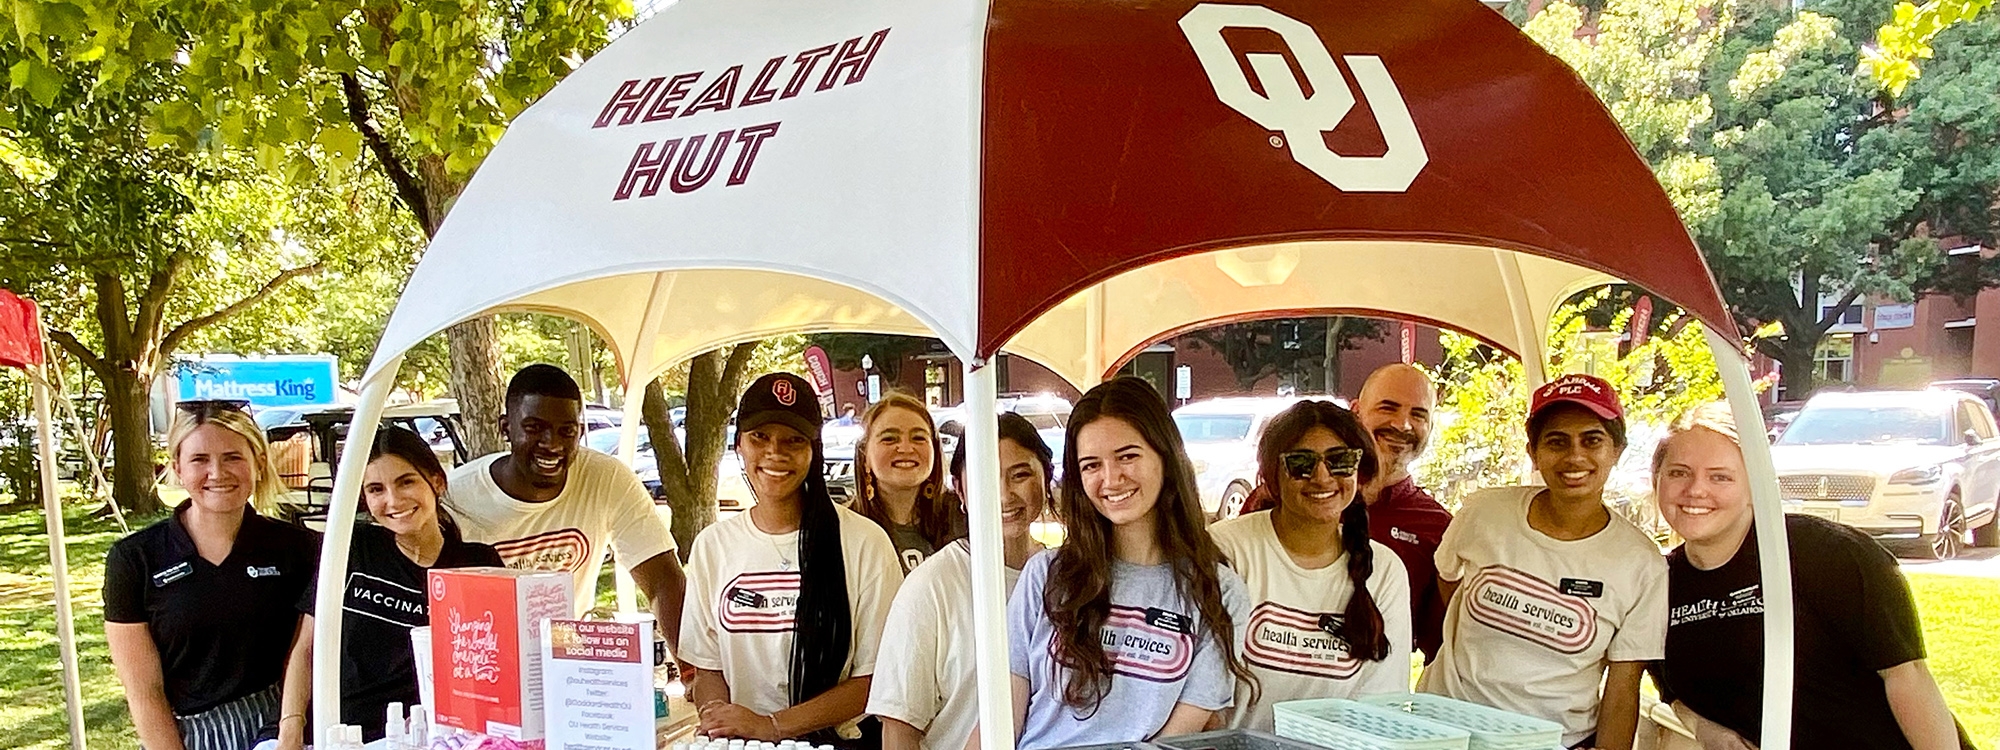 OU Health Hut on University of Oklahoma campus